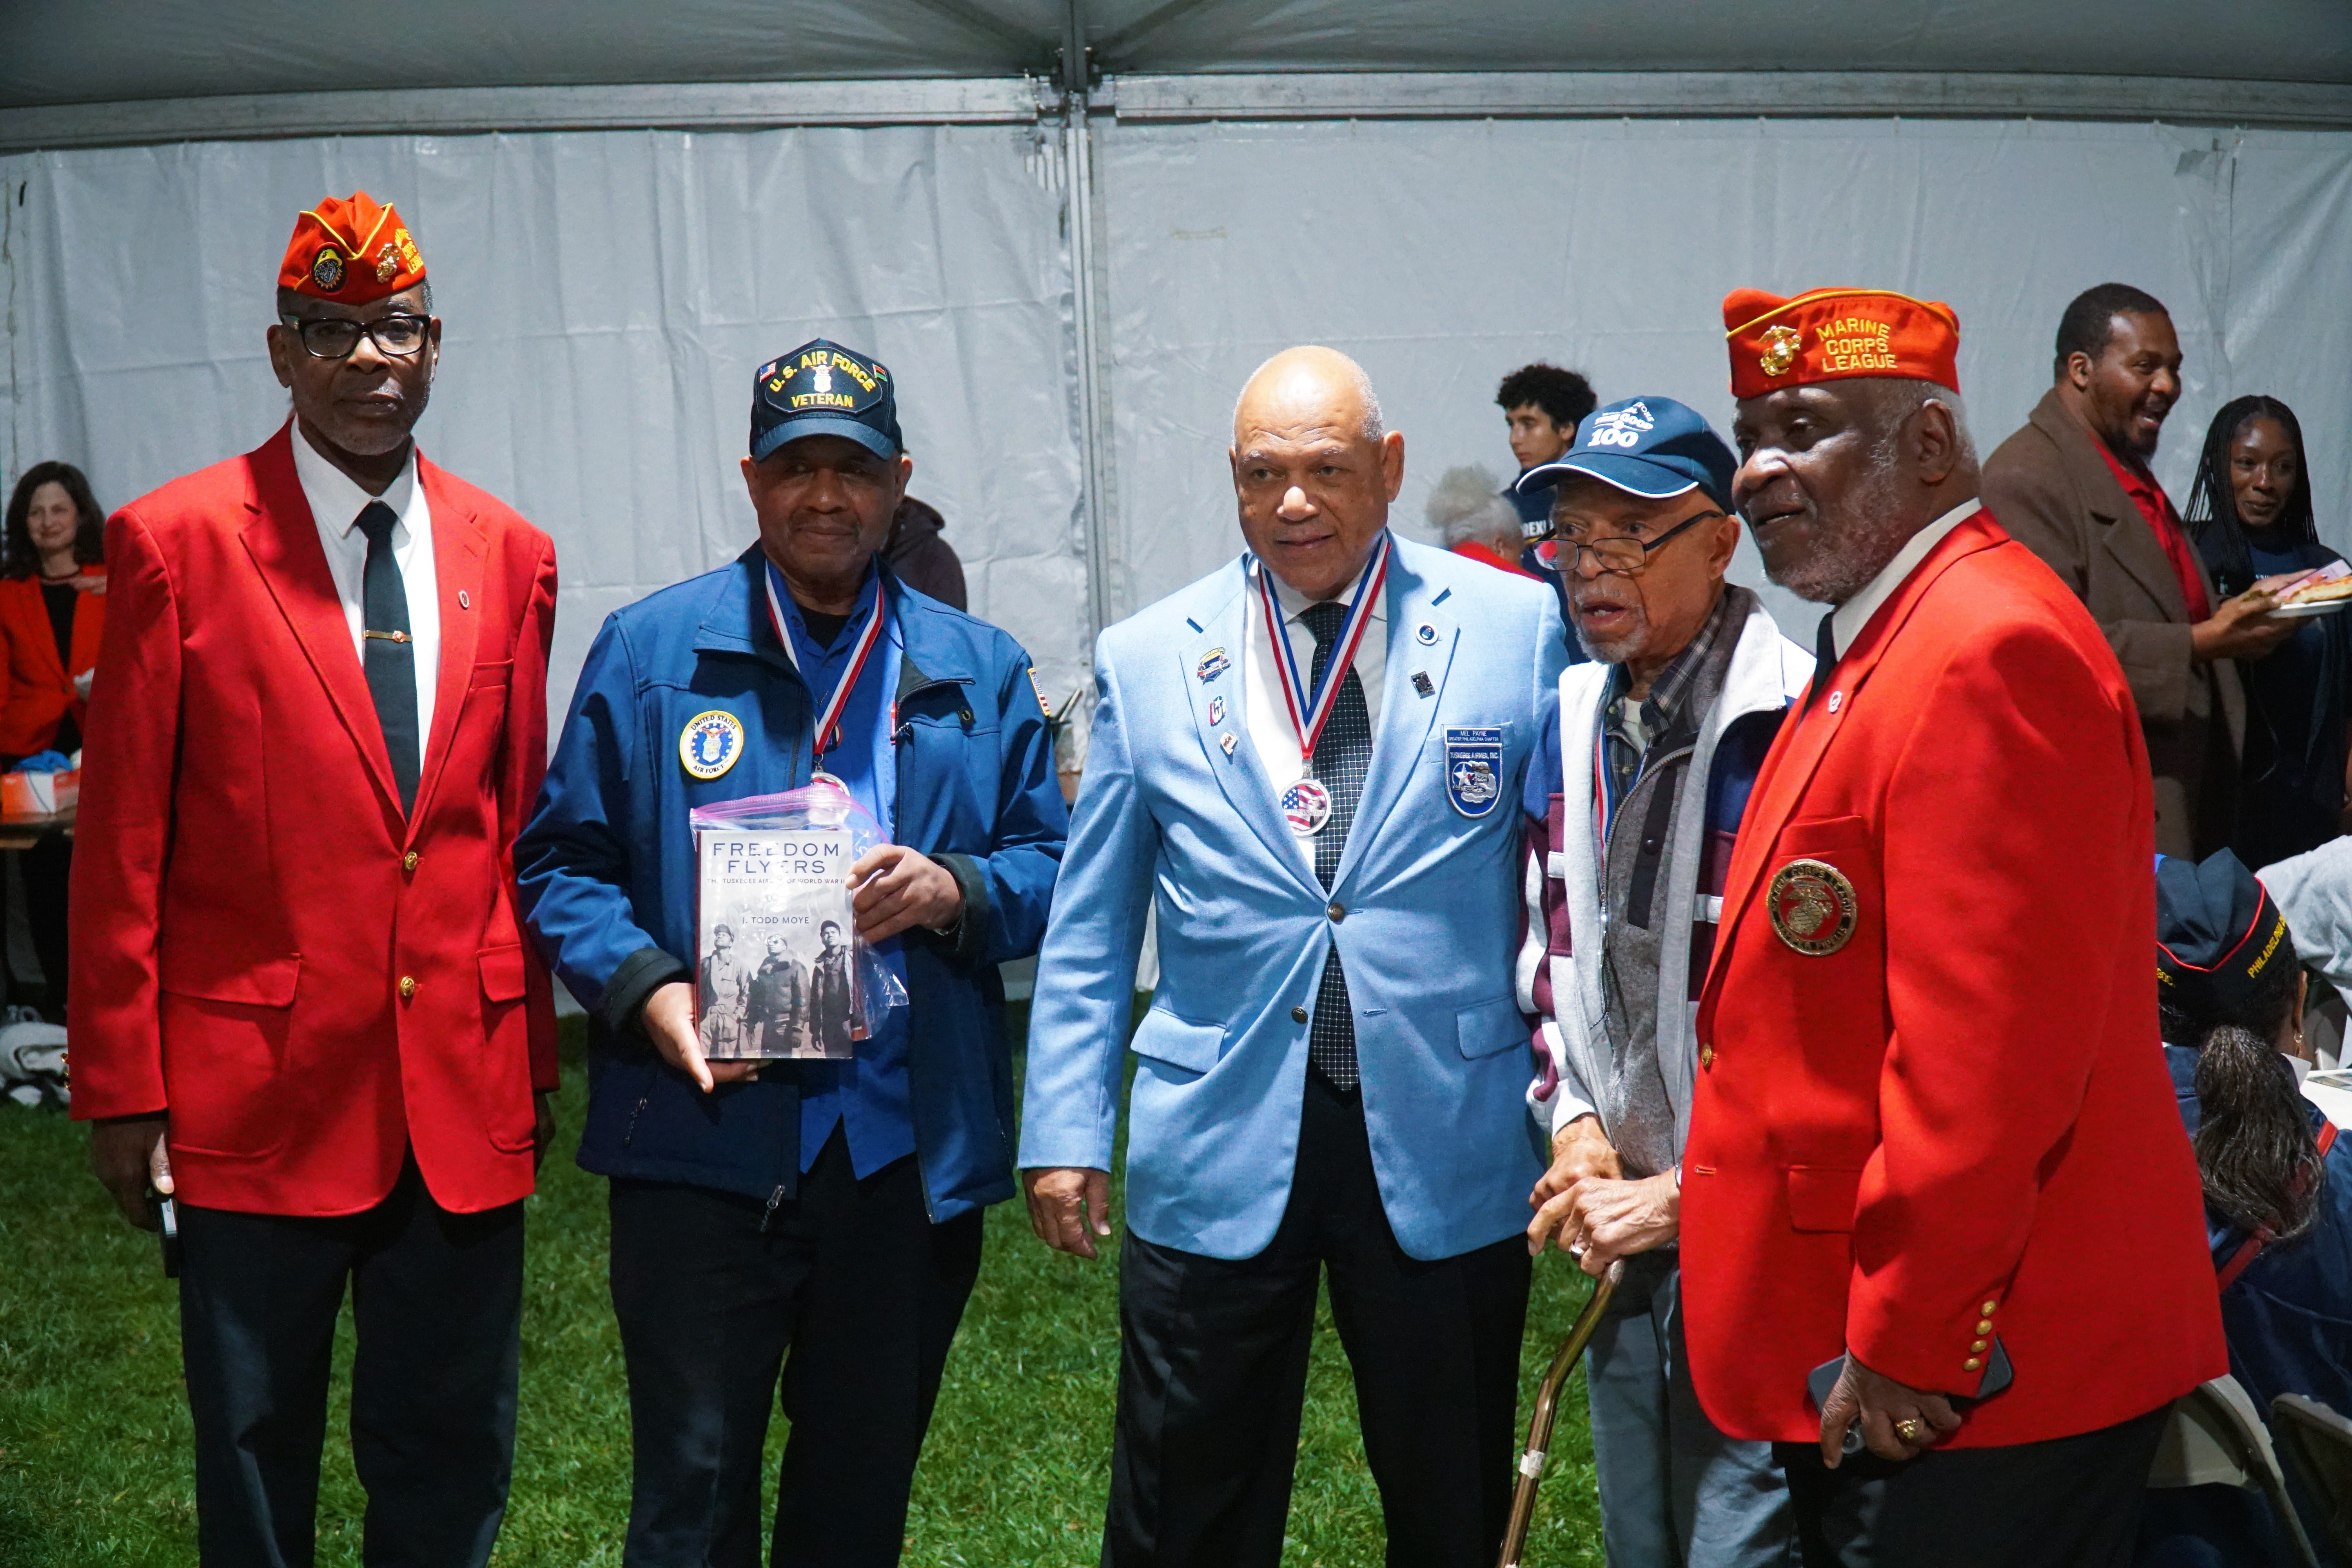 Members of the Greater Philadelphia Chapter Tuskegee Airmen